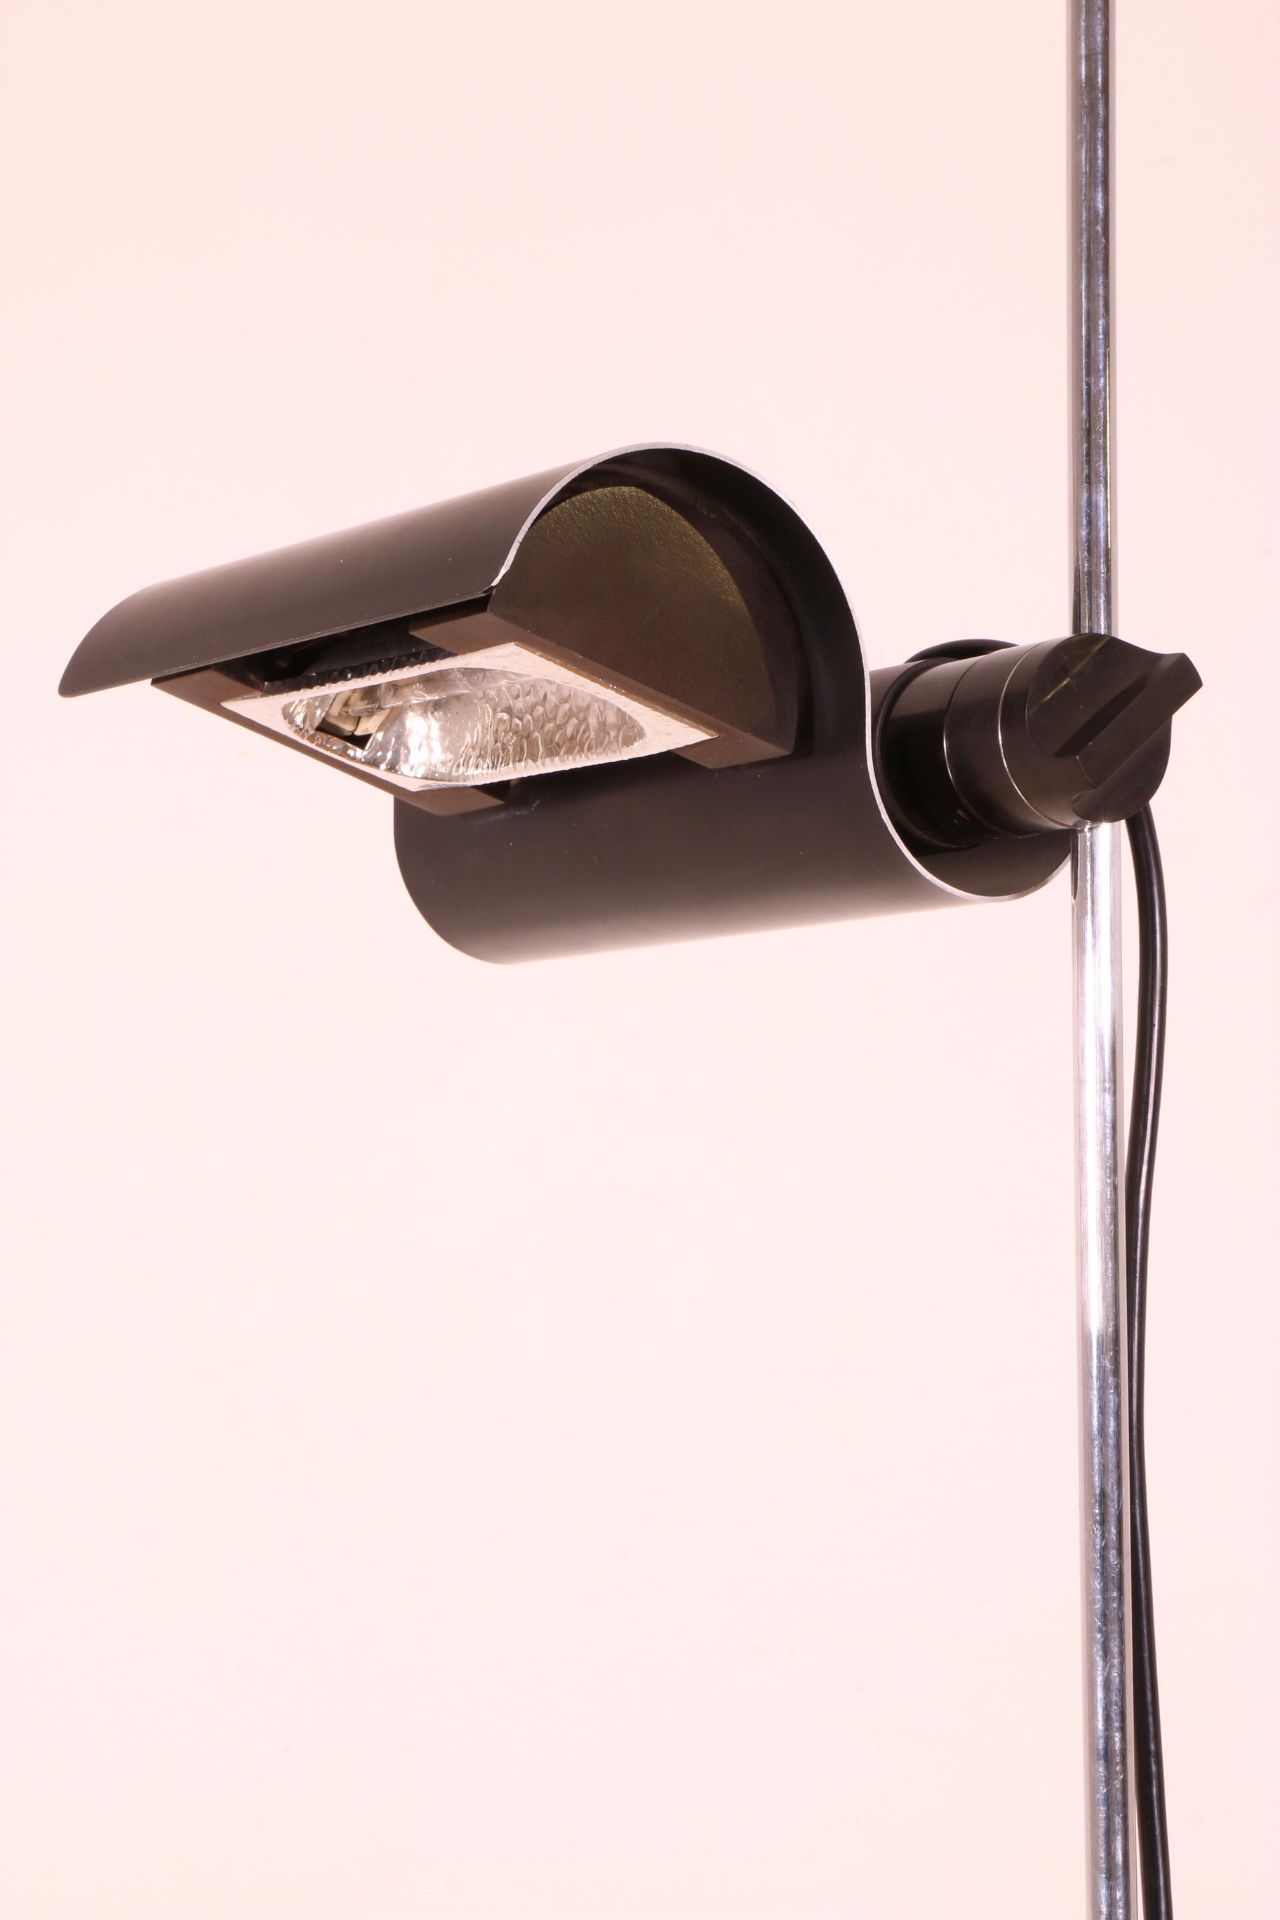 Vico Magistretti voor Oluce, Italië, staande 'Dim 333' vloerlamp, ontwerp 80-er jaren. - Bild 3 aus 4